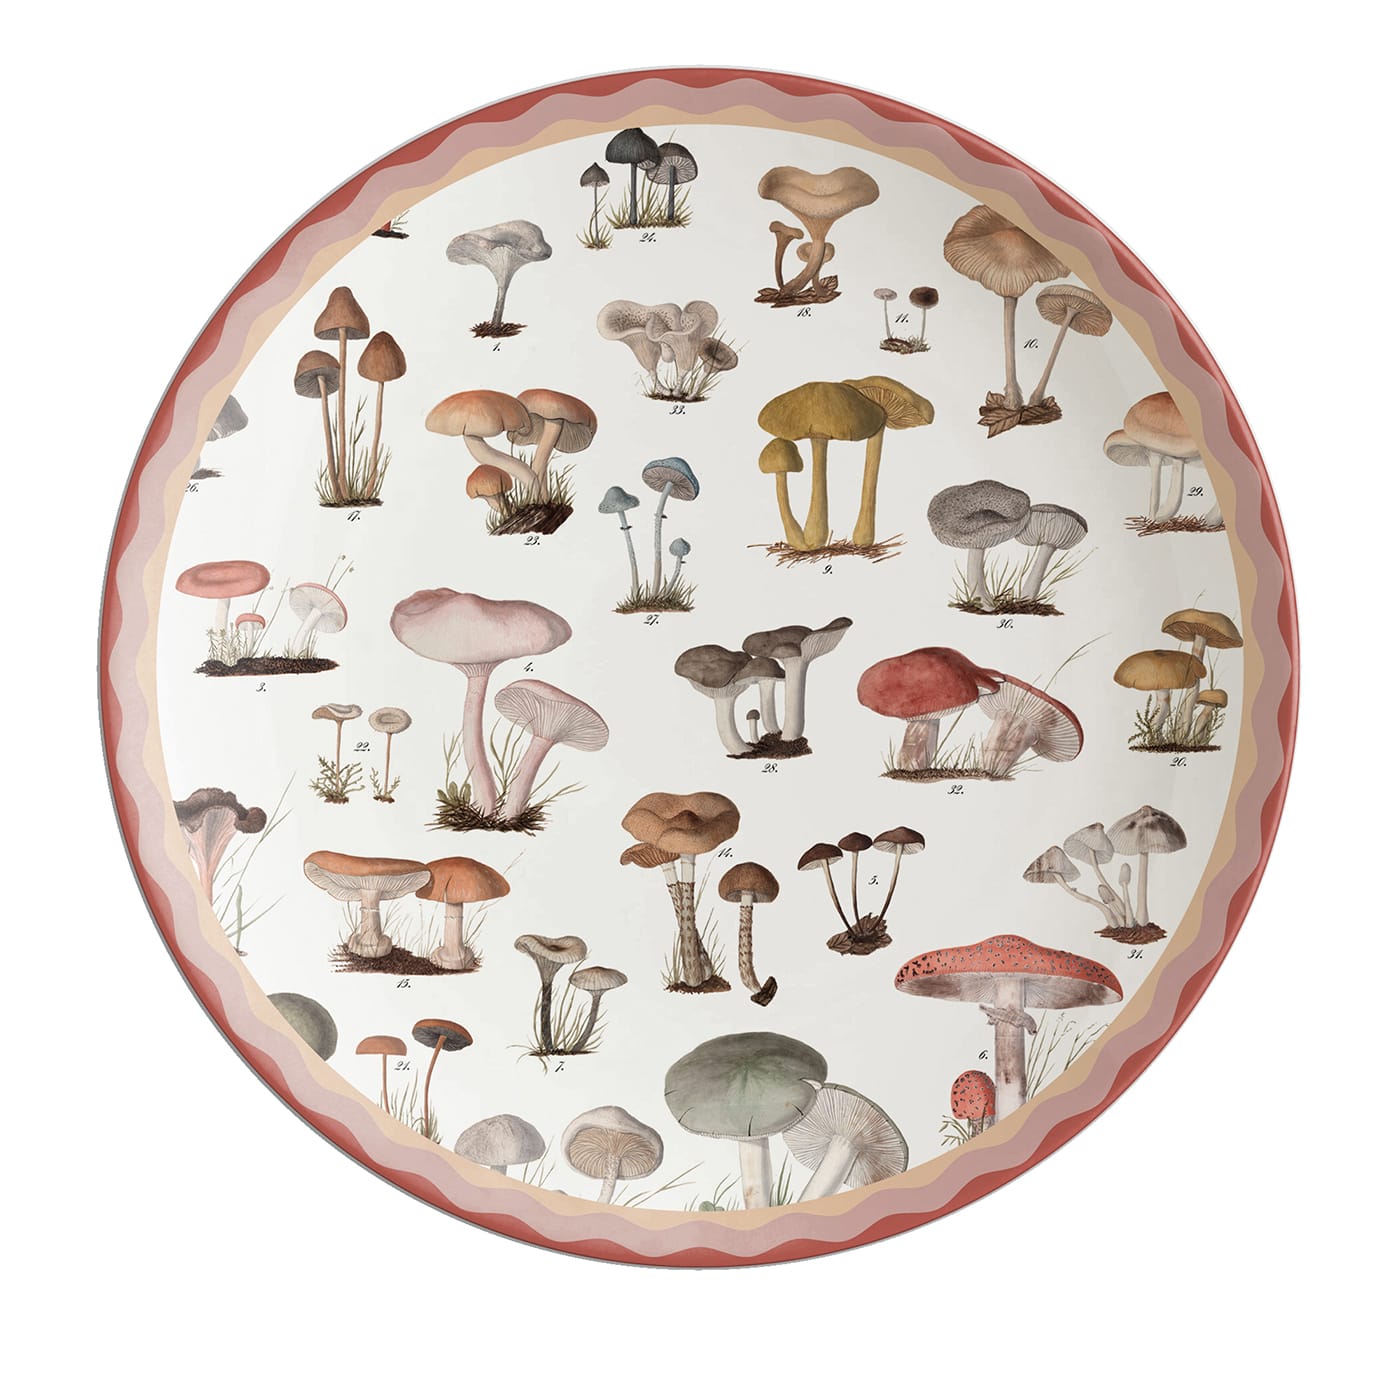 Cabinet de Curiosités Mushrooms Charger Plate - Grand Tour by Vito Nesta